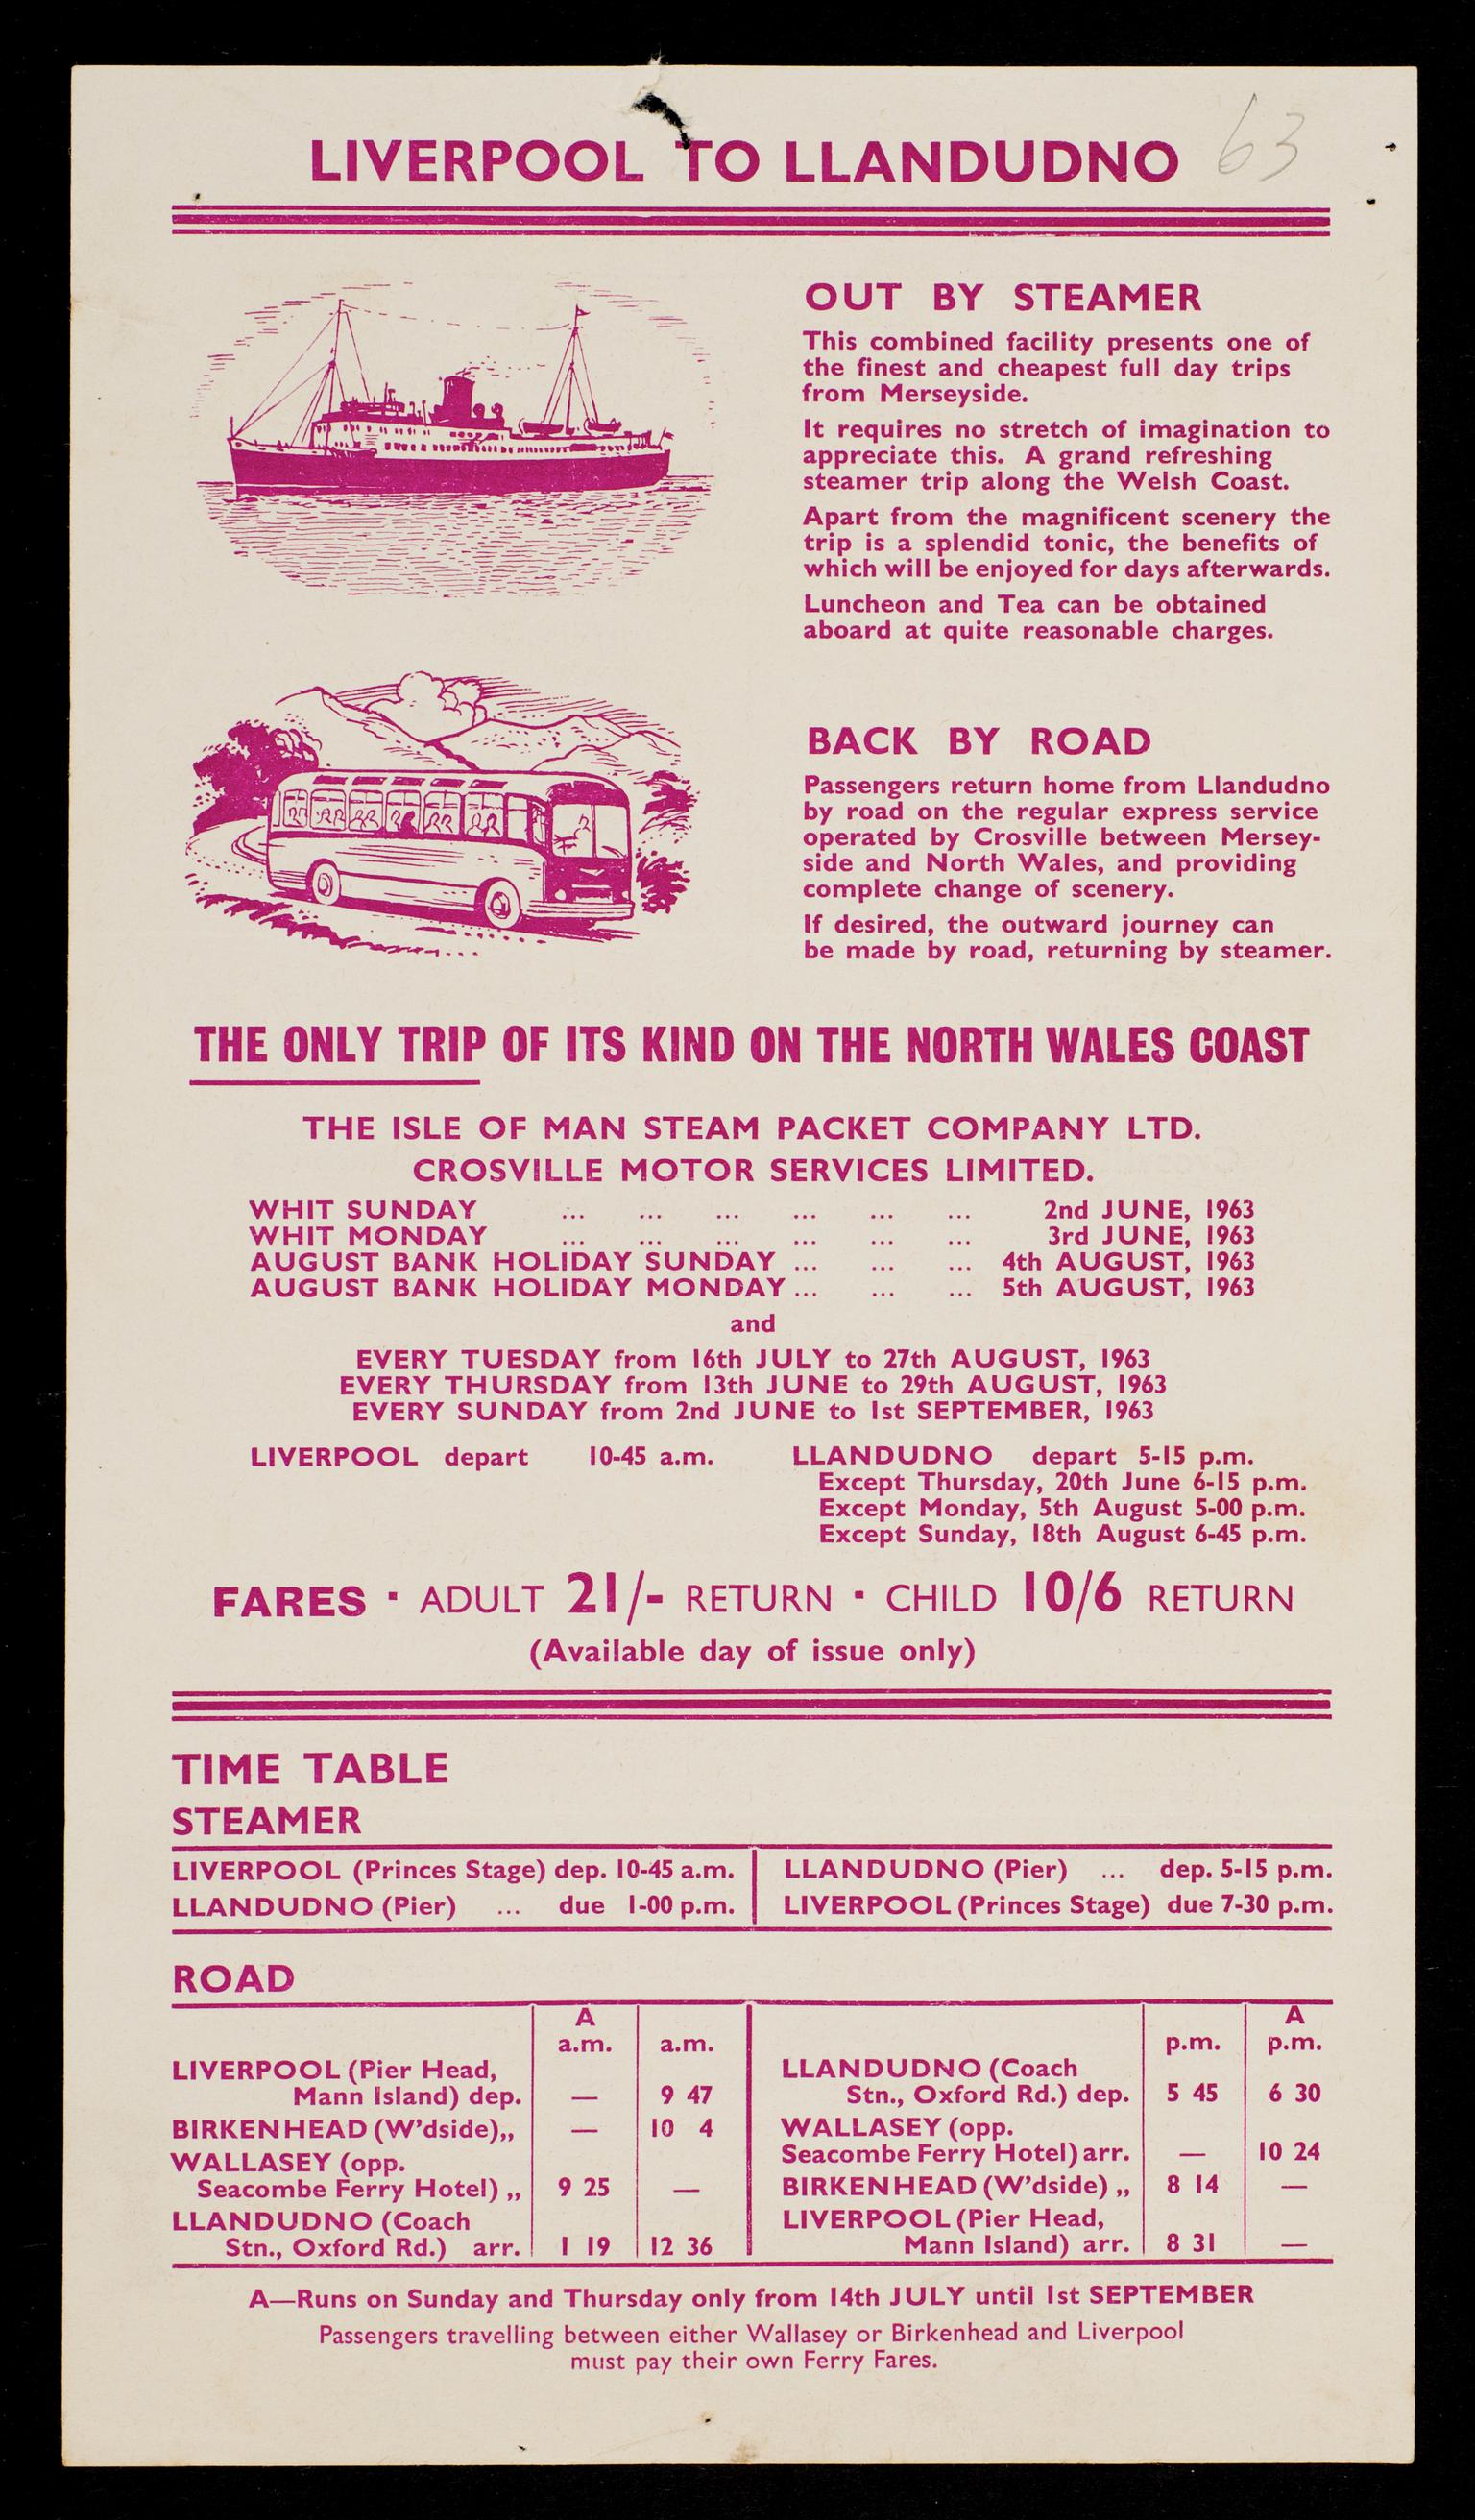 Isle of Man Steam Packet Co. Ltd., handbill